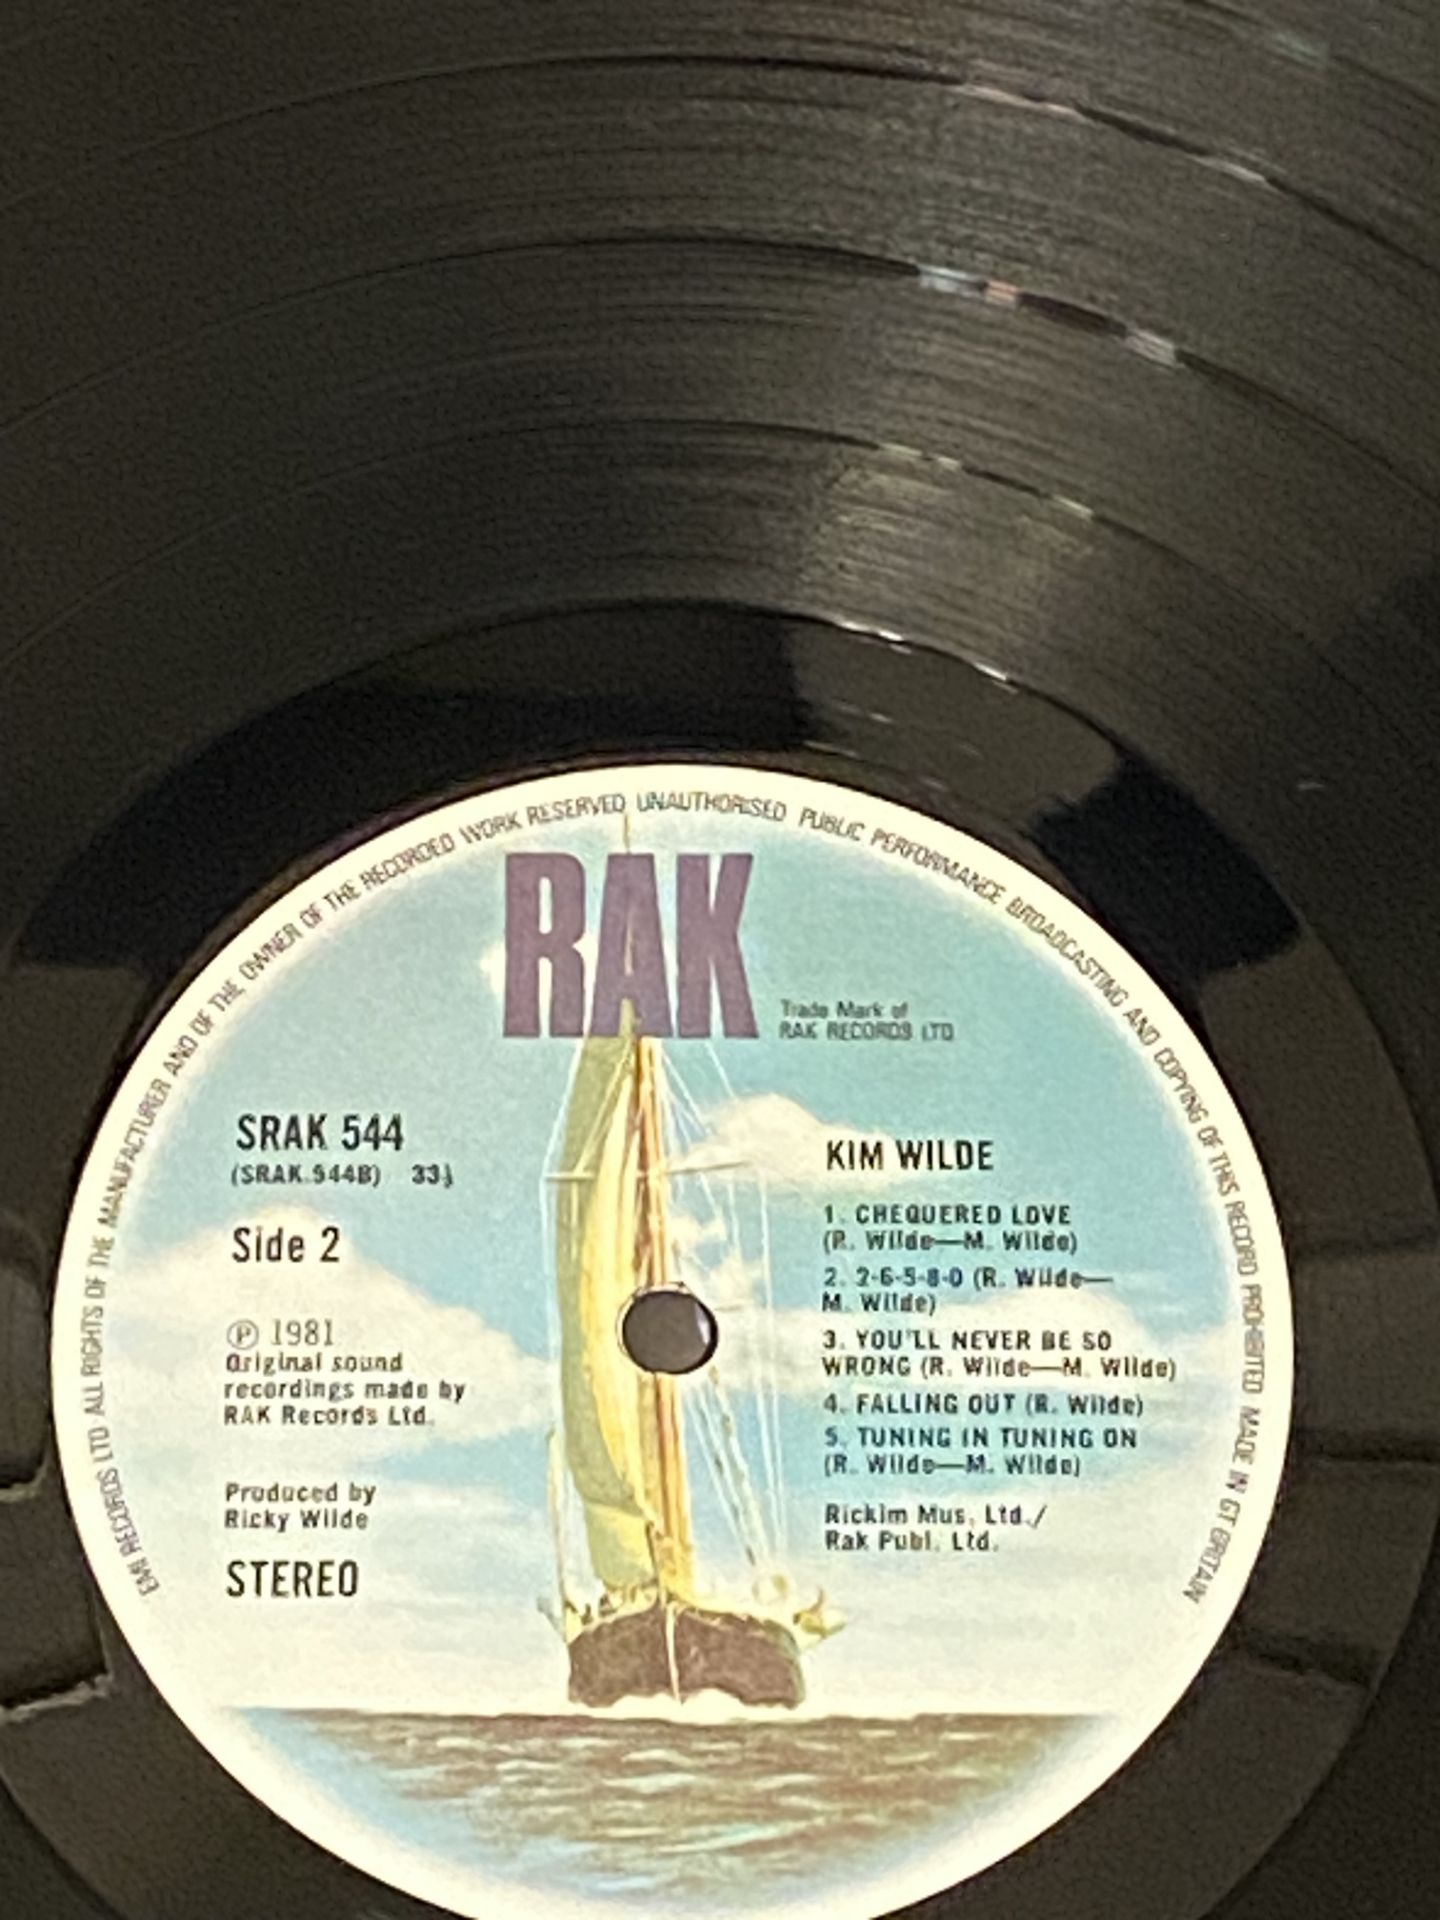 Kim Wilde Signed LP - Alan Partridge LP - The Firm LP. - Image 6 of 20